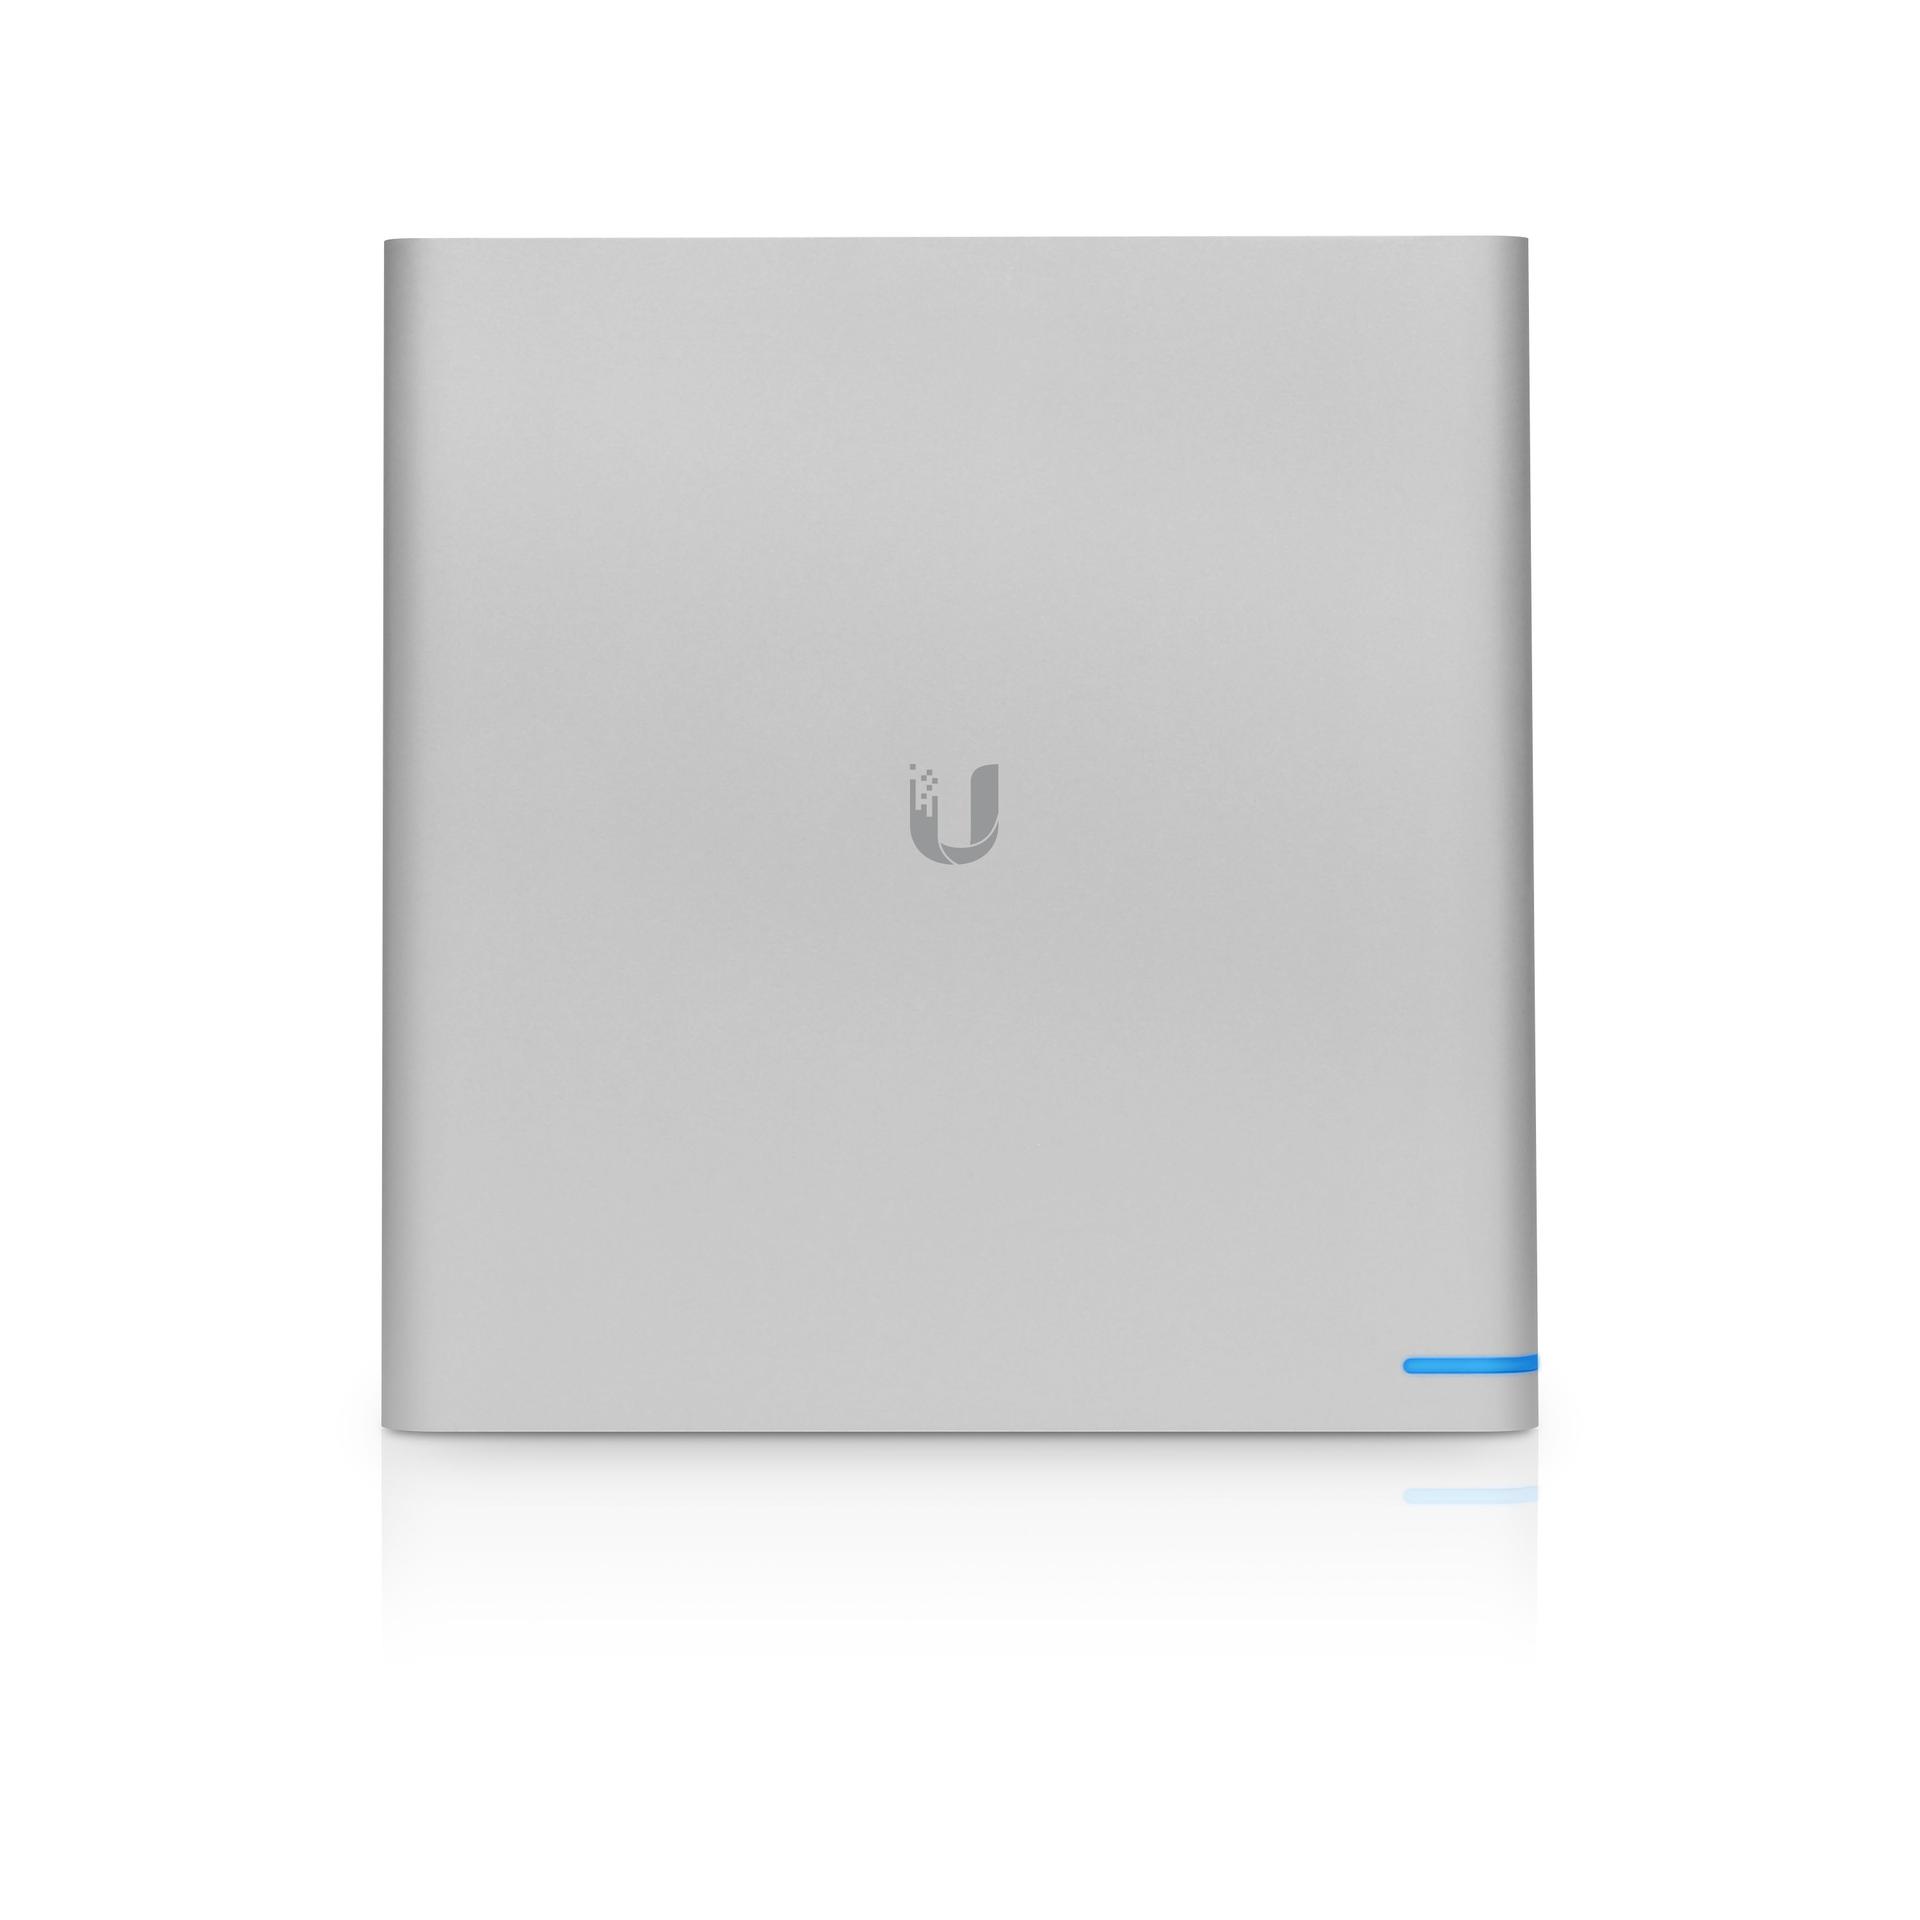 Ubiquiti UCK-G2-PLUS UniFi Gen2 Cloud Key Controller Top View Image